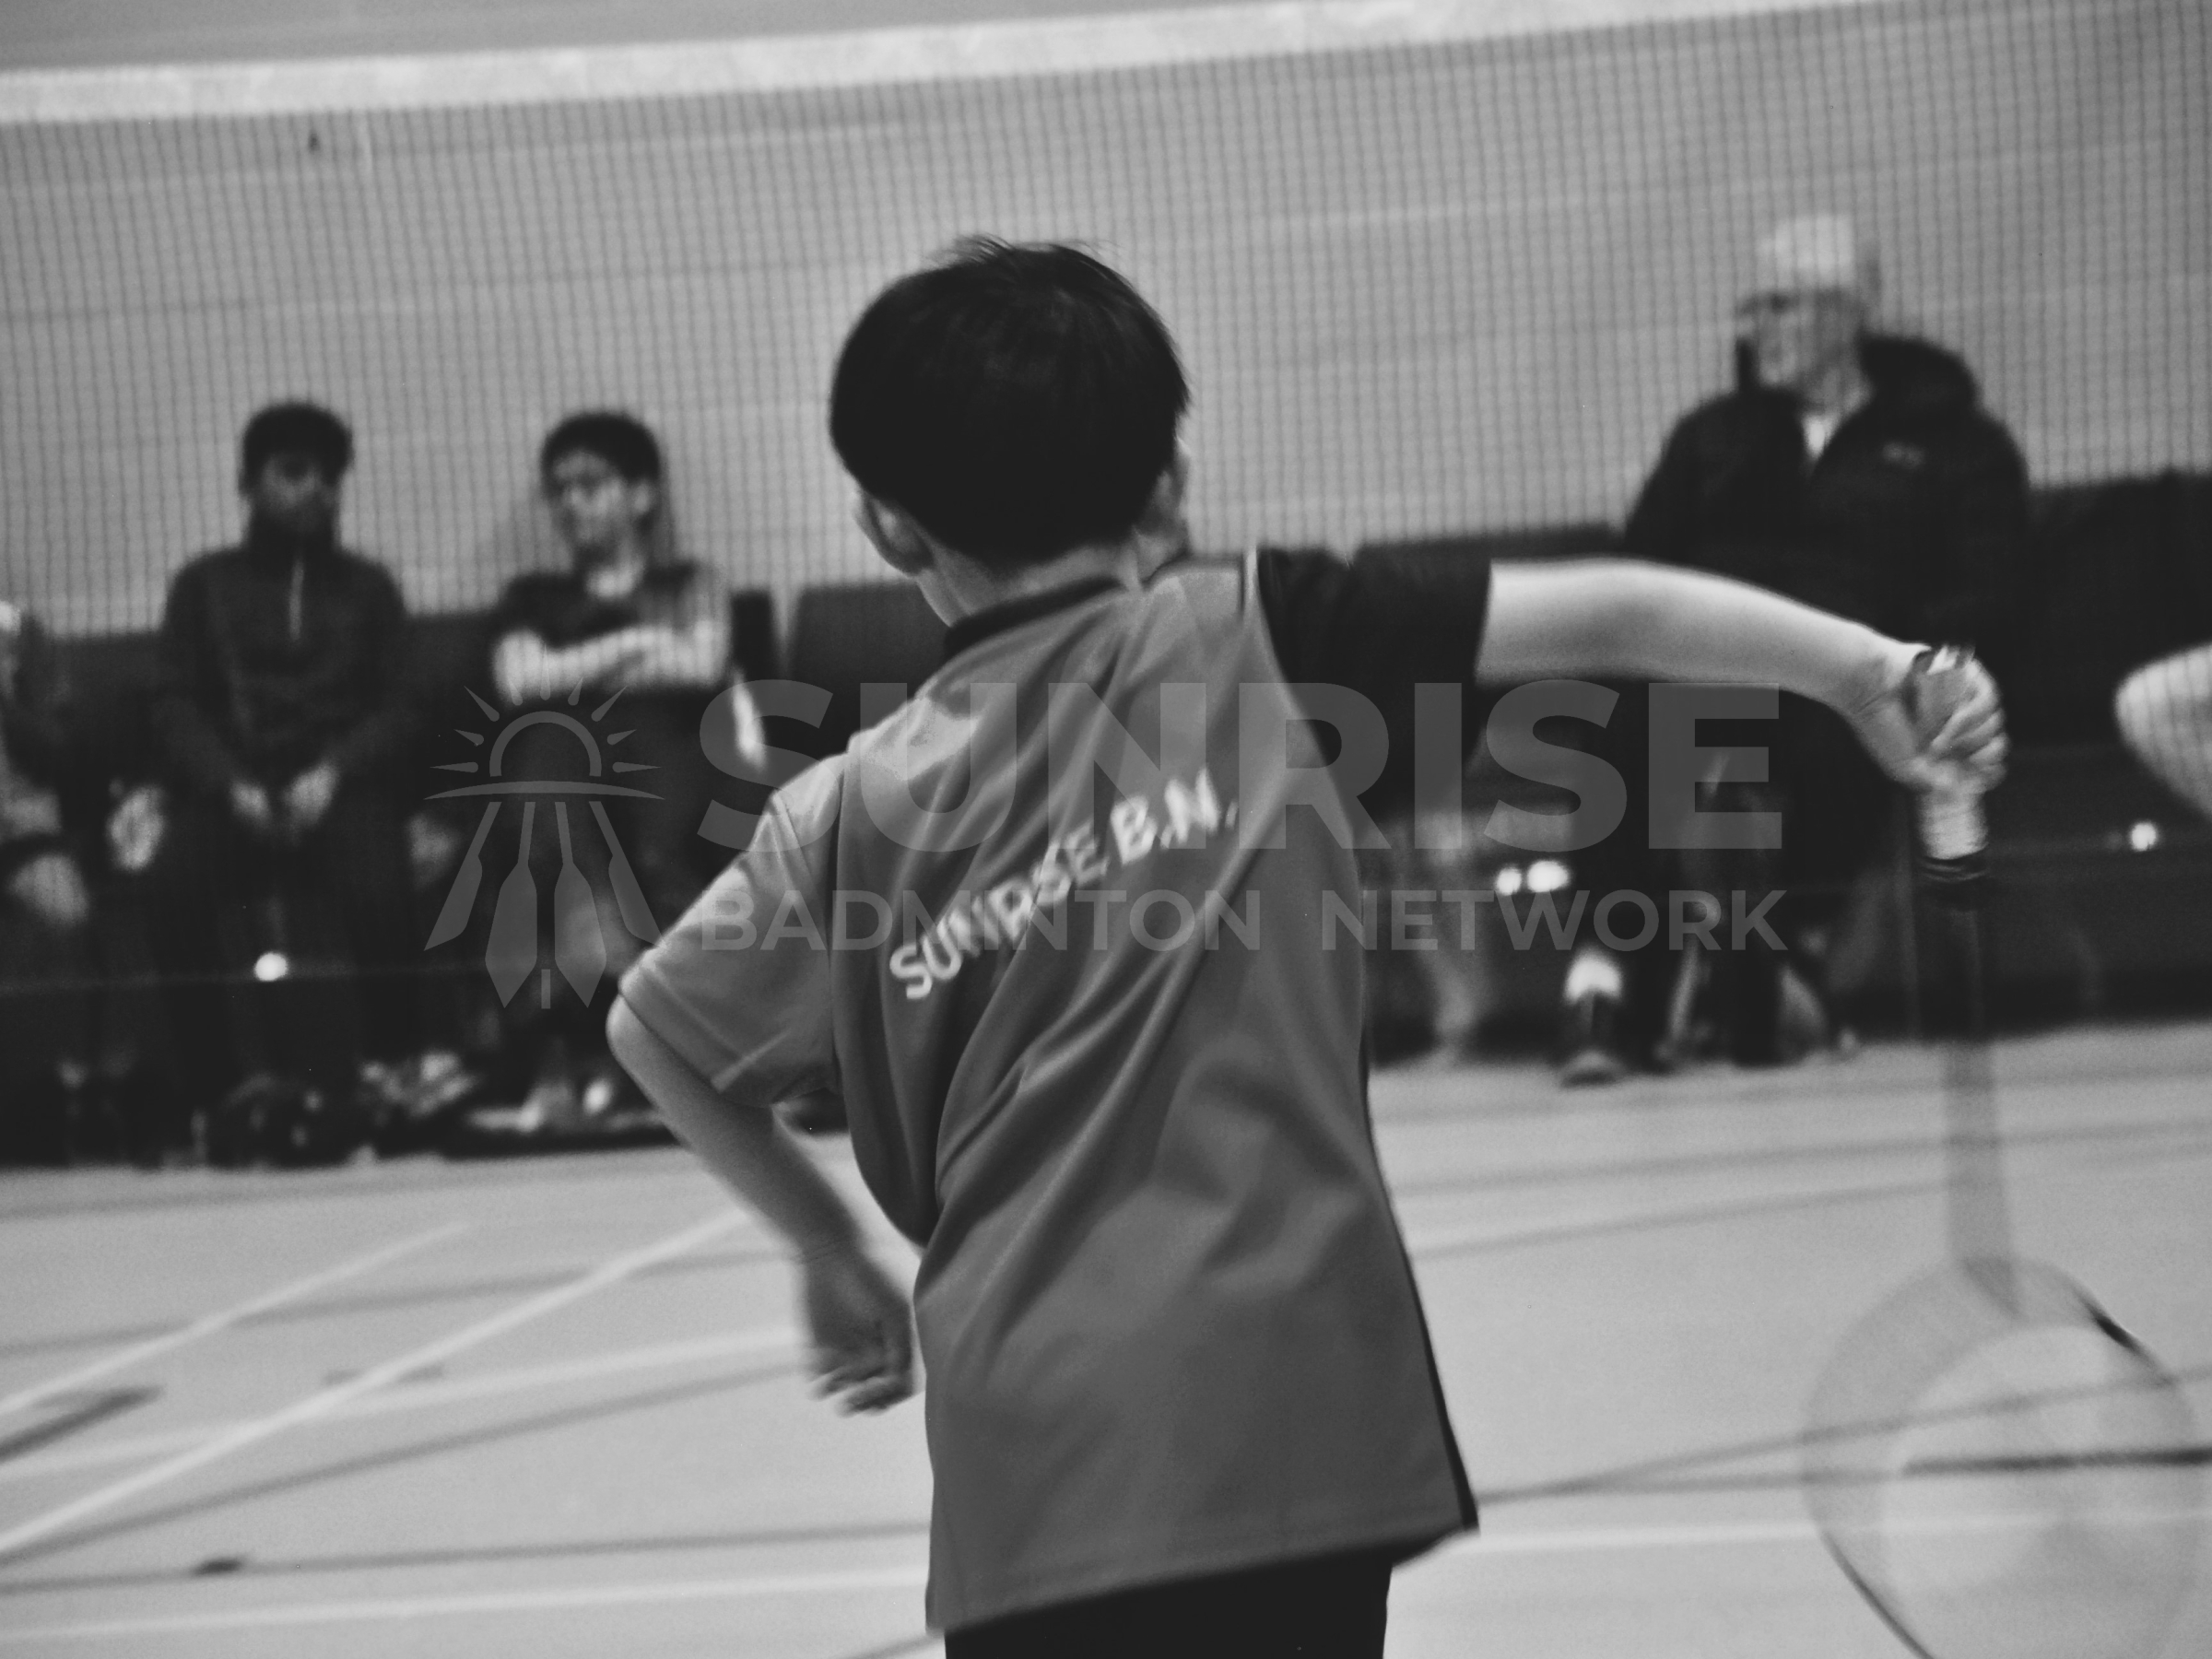 Sunrise-Junior-Badminton-Network-Sessions-Warrington-Padgate-Birchwood-Appleton-Great-Sankey-Youth-Zone-Badminton-Coaching-Tournament-Crewe-Junior-League